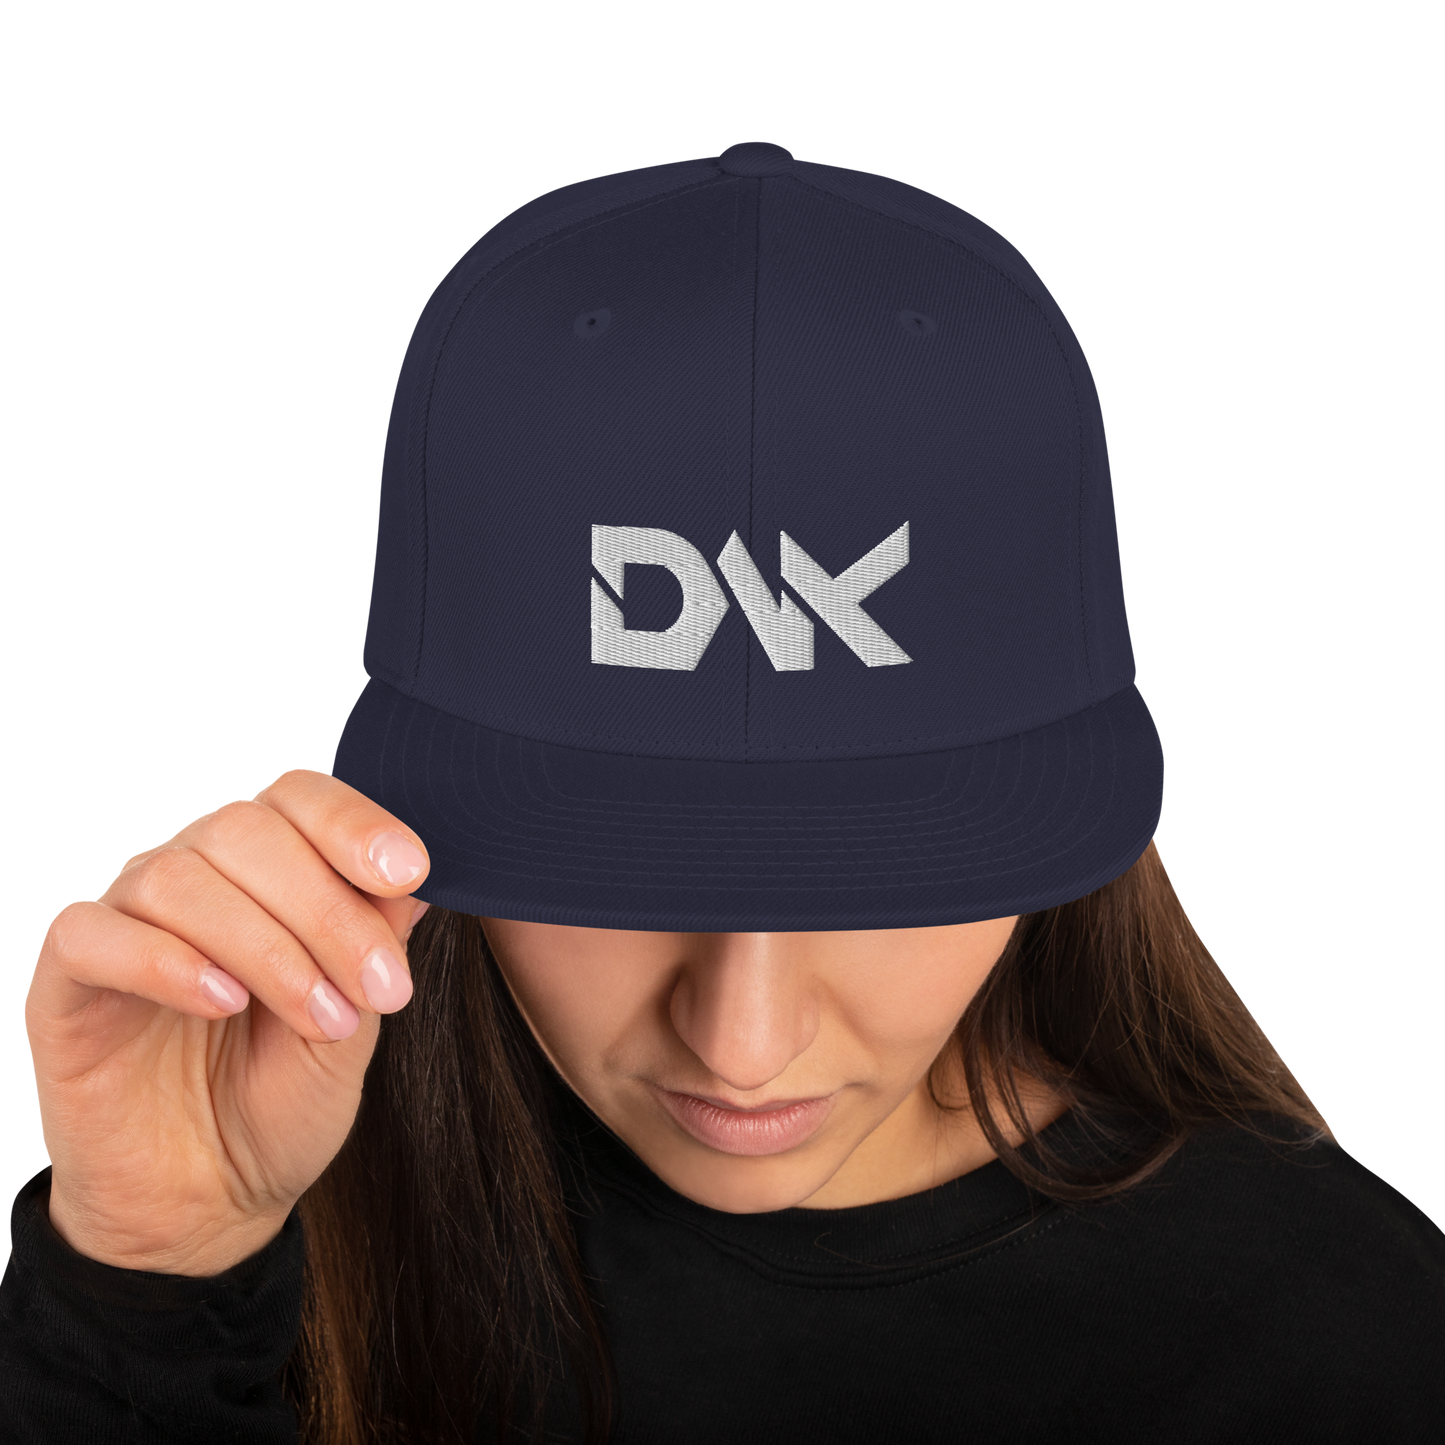 Dak's Snapback Hat